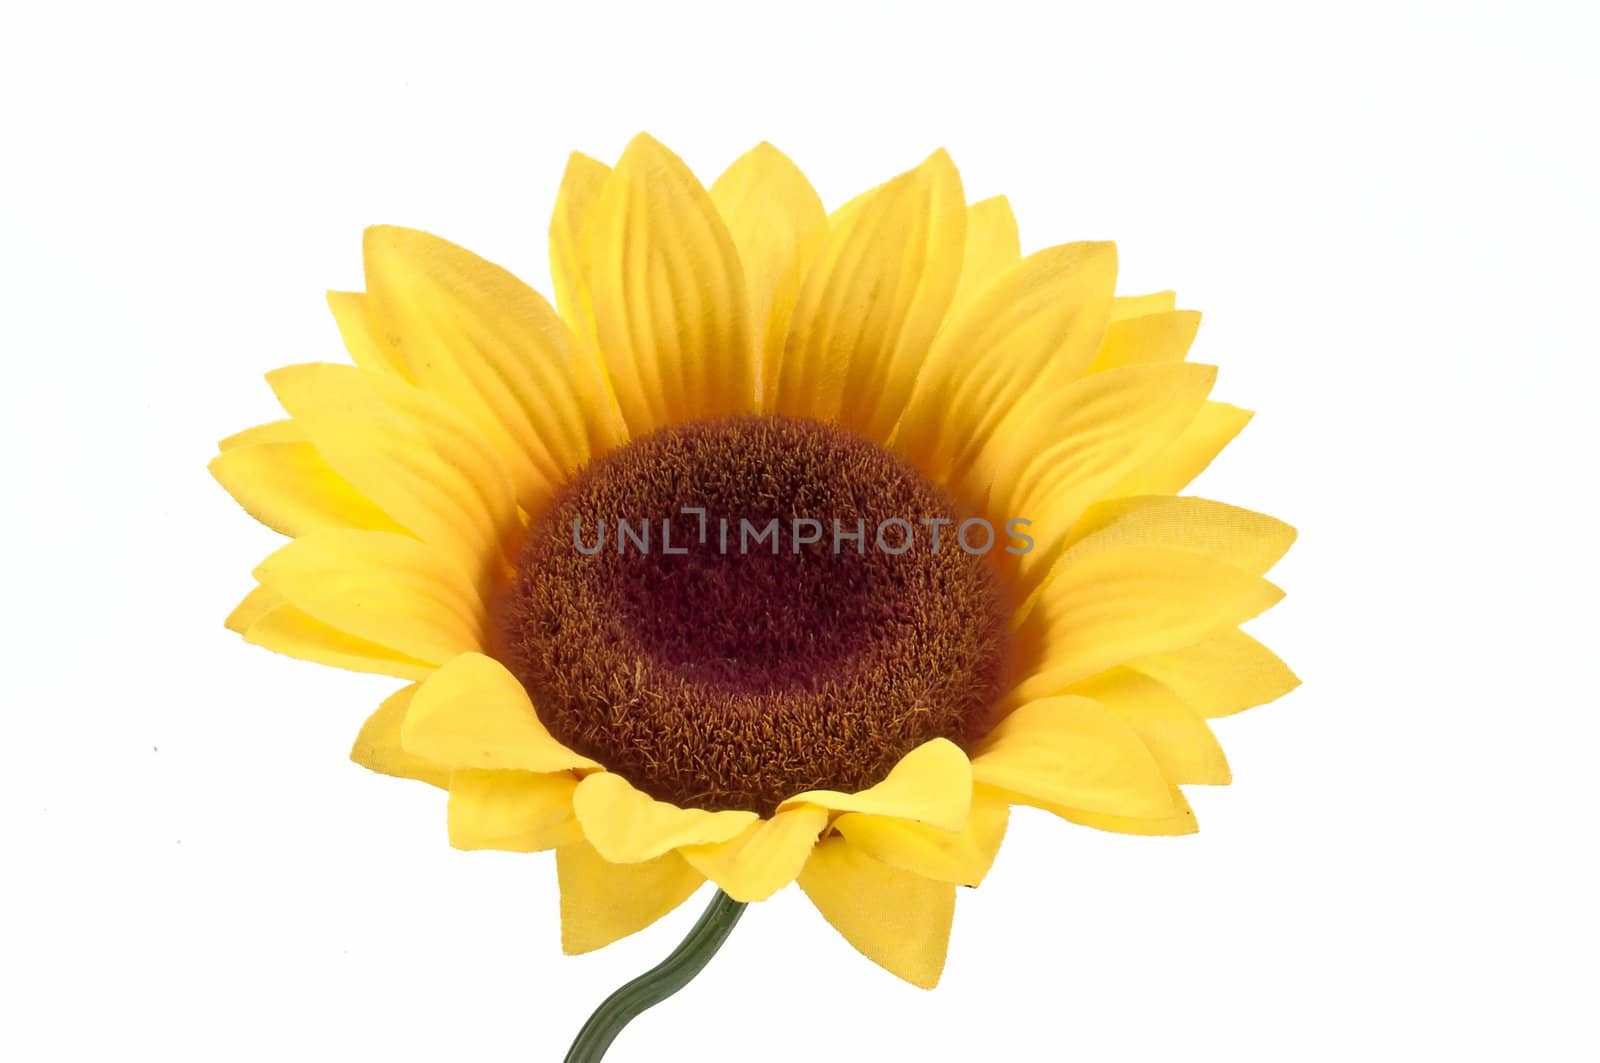 Sunflower by rigamondis